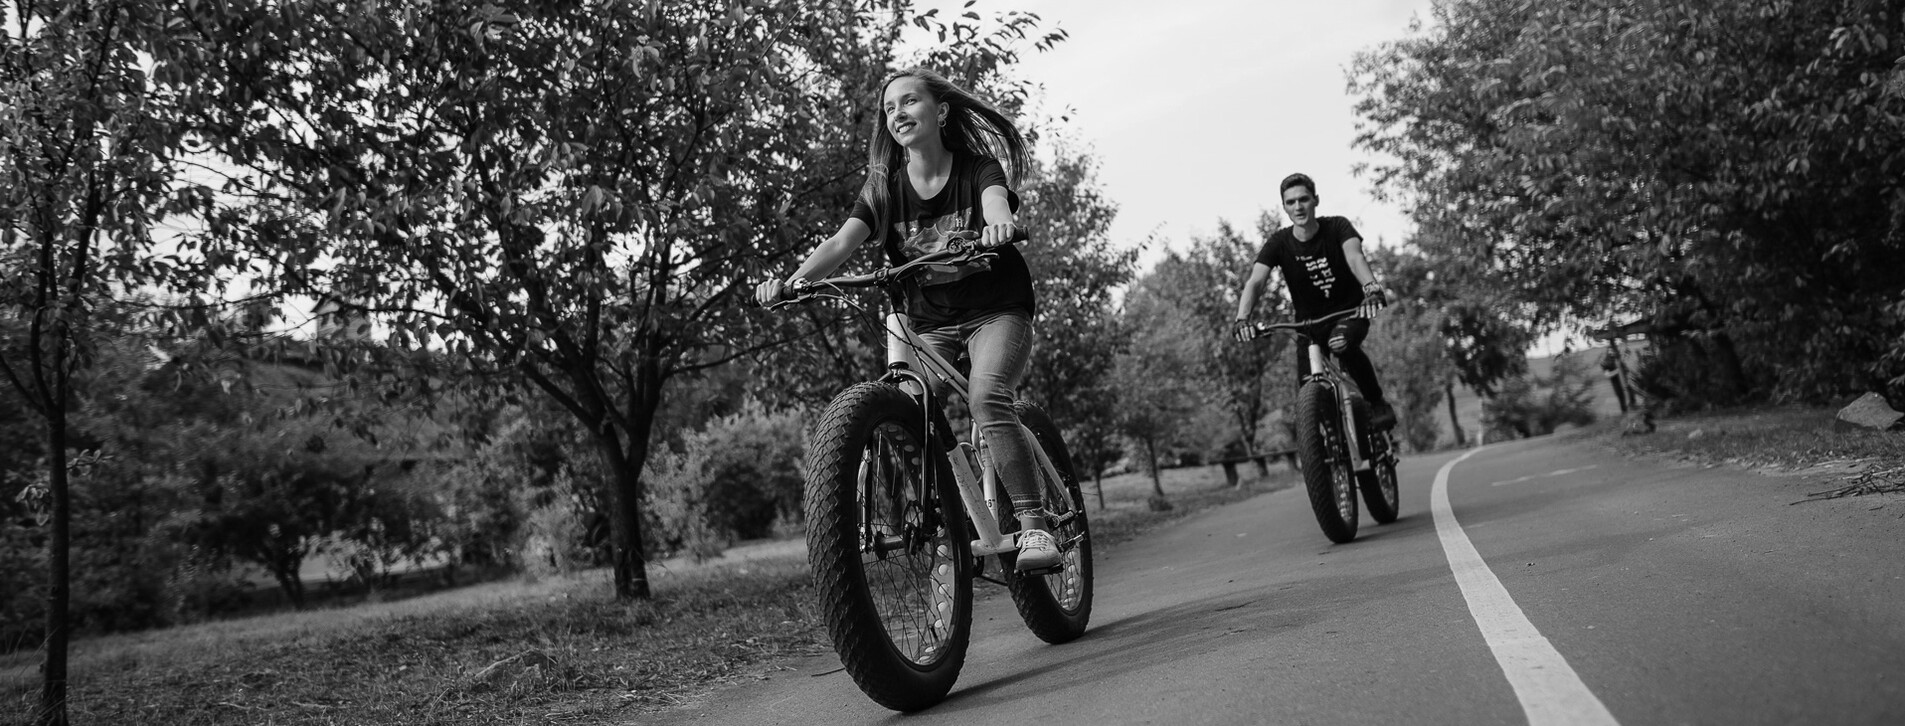 Fotoğraf 1 - Aile için Ormanda Fetbike Bisiklet Turu